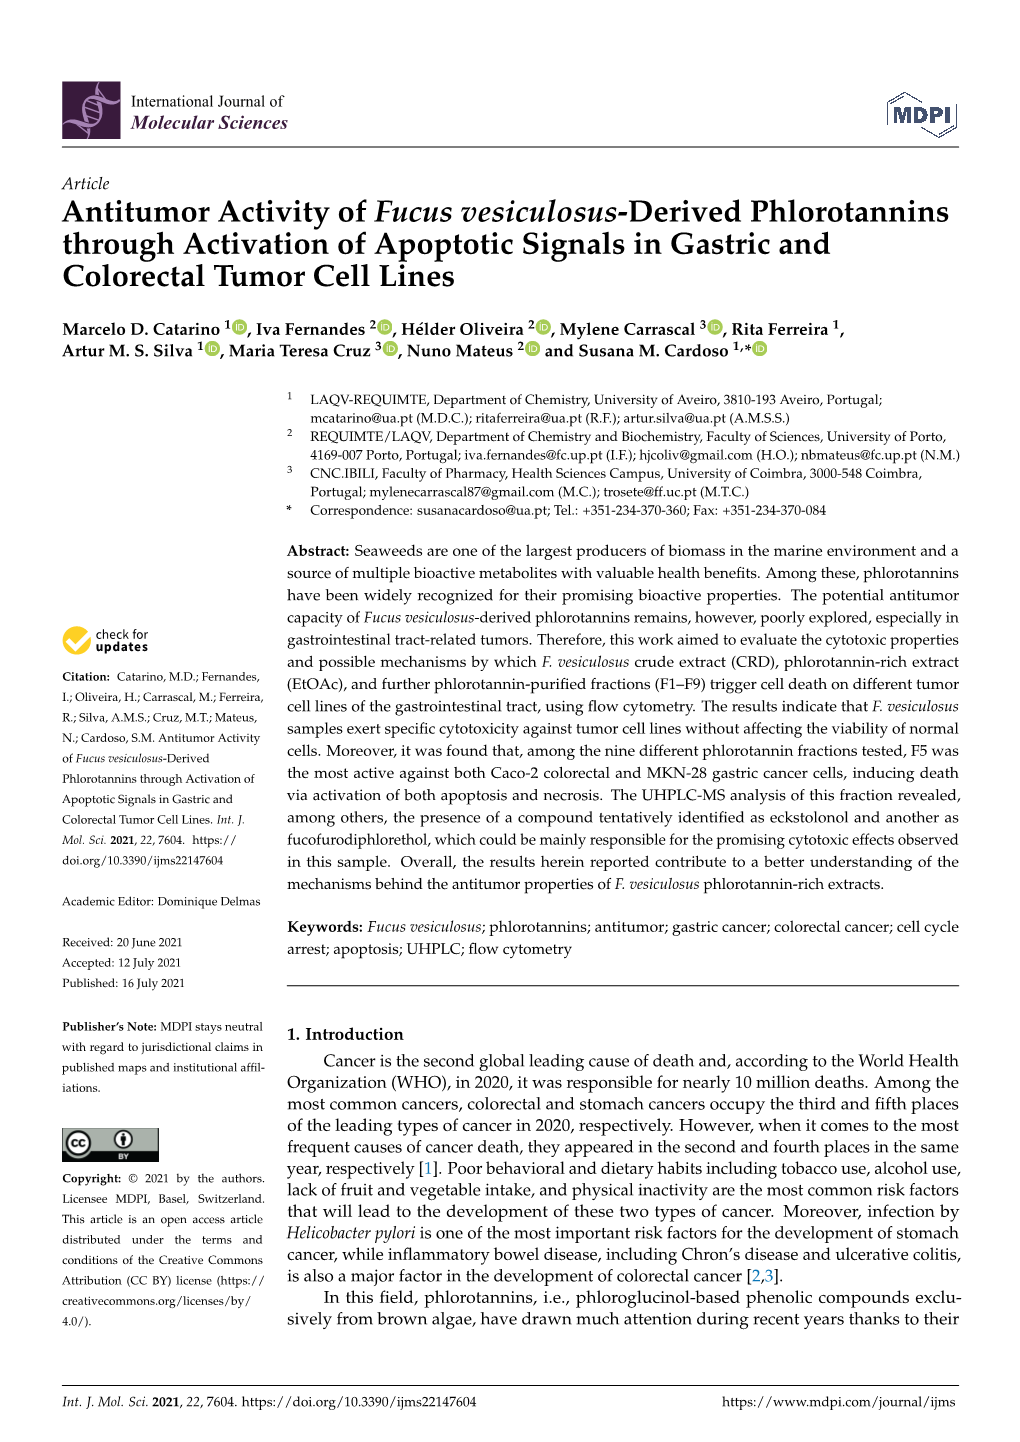 Antitumor Activity of Fucus Vesiculosus-Derived Phlorotannins Through Activation of Apoptotic Signals in Gastric and Colorectal Tumor Cell Lines